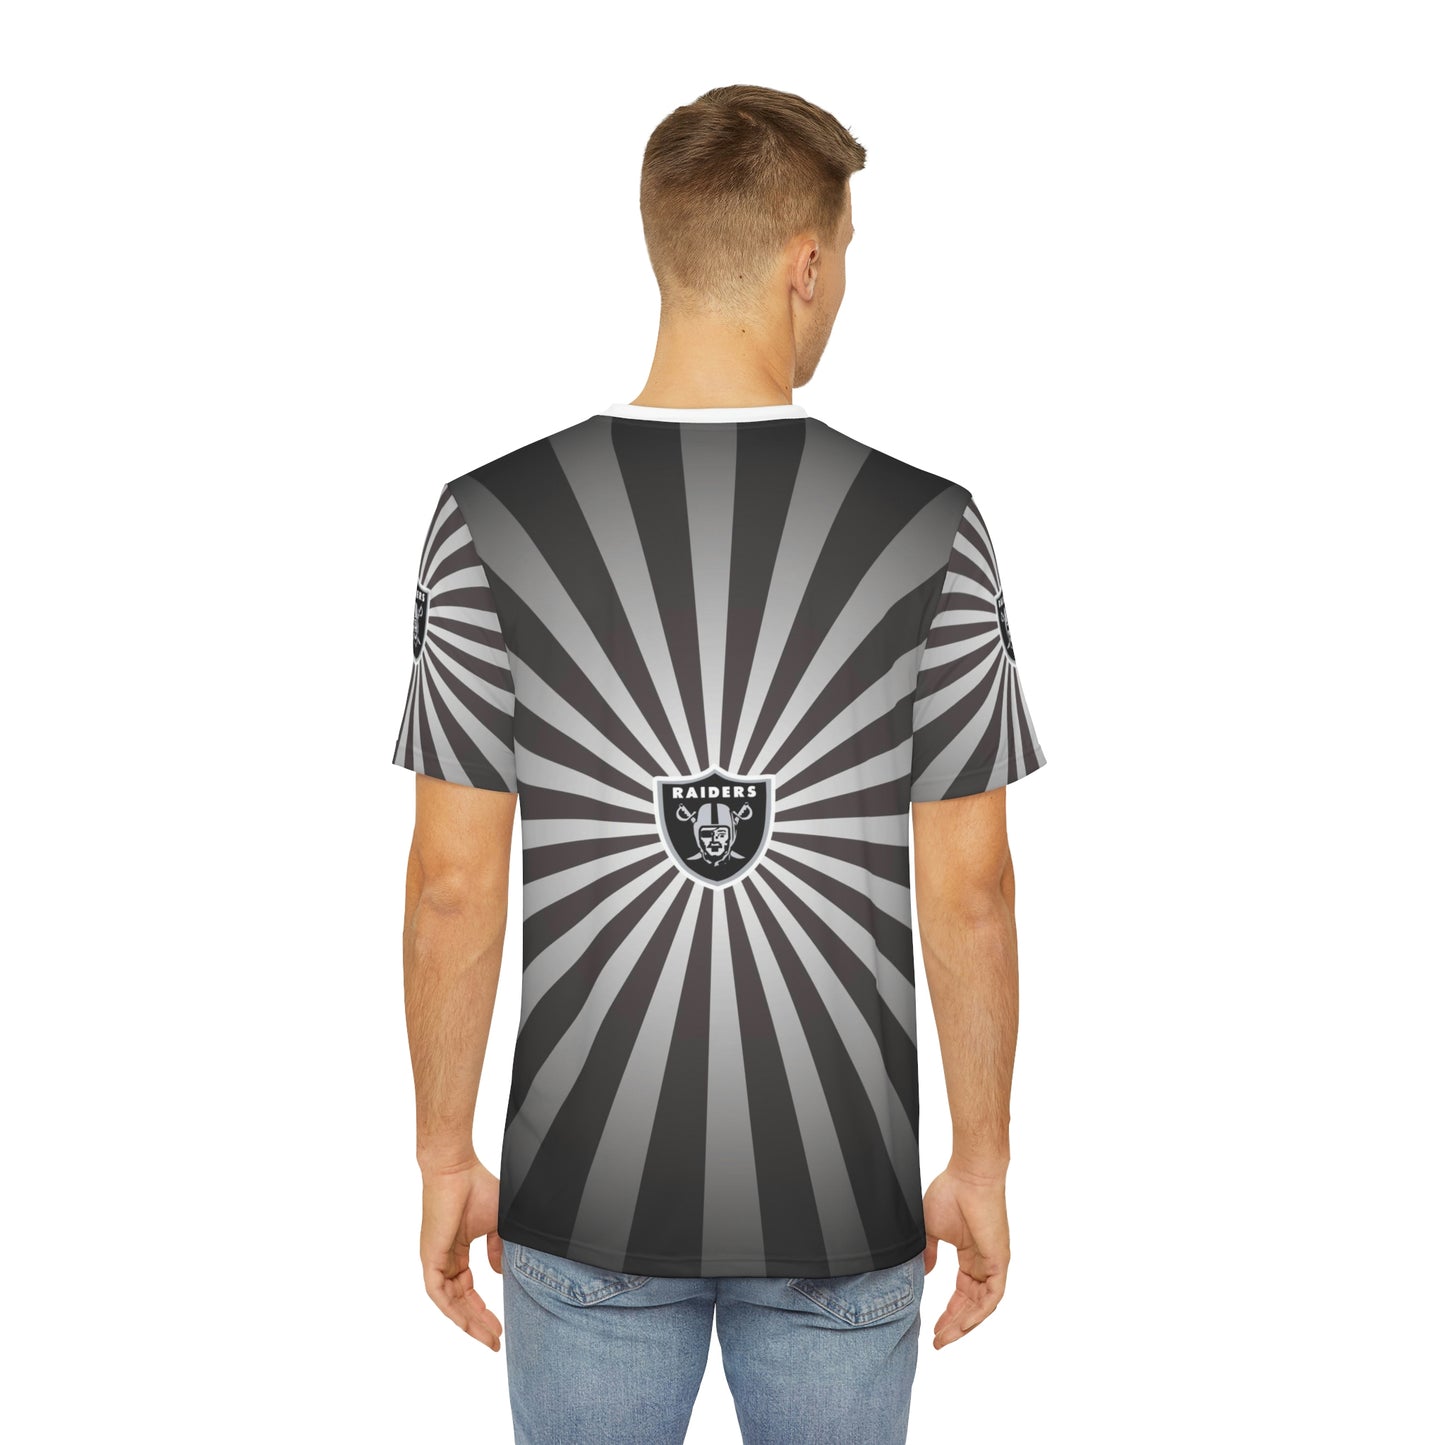 Geotrott NFL Las Vegas Raiders Men's Polyester All Over Print Tee T-Shirt-All Over Prints-Geotrott